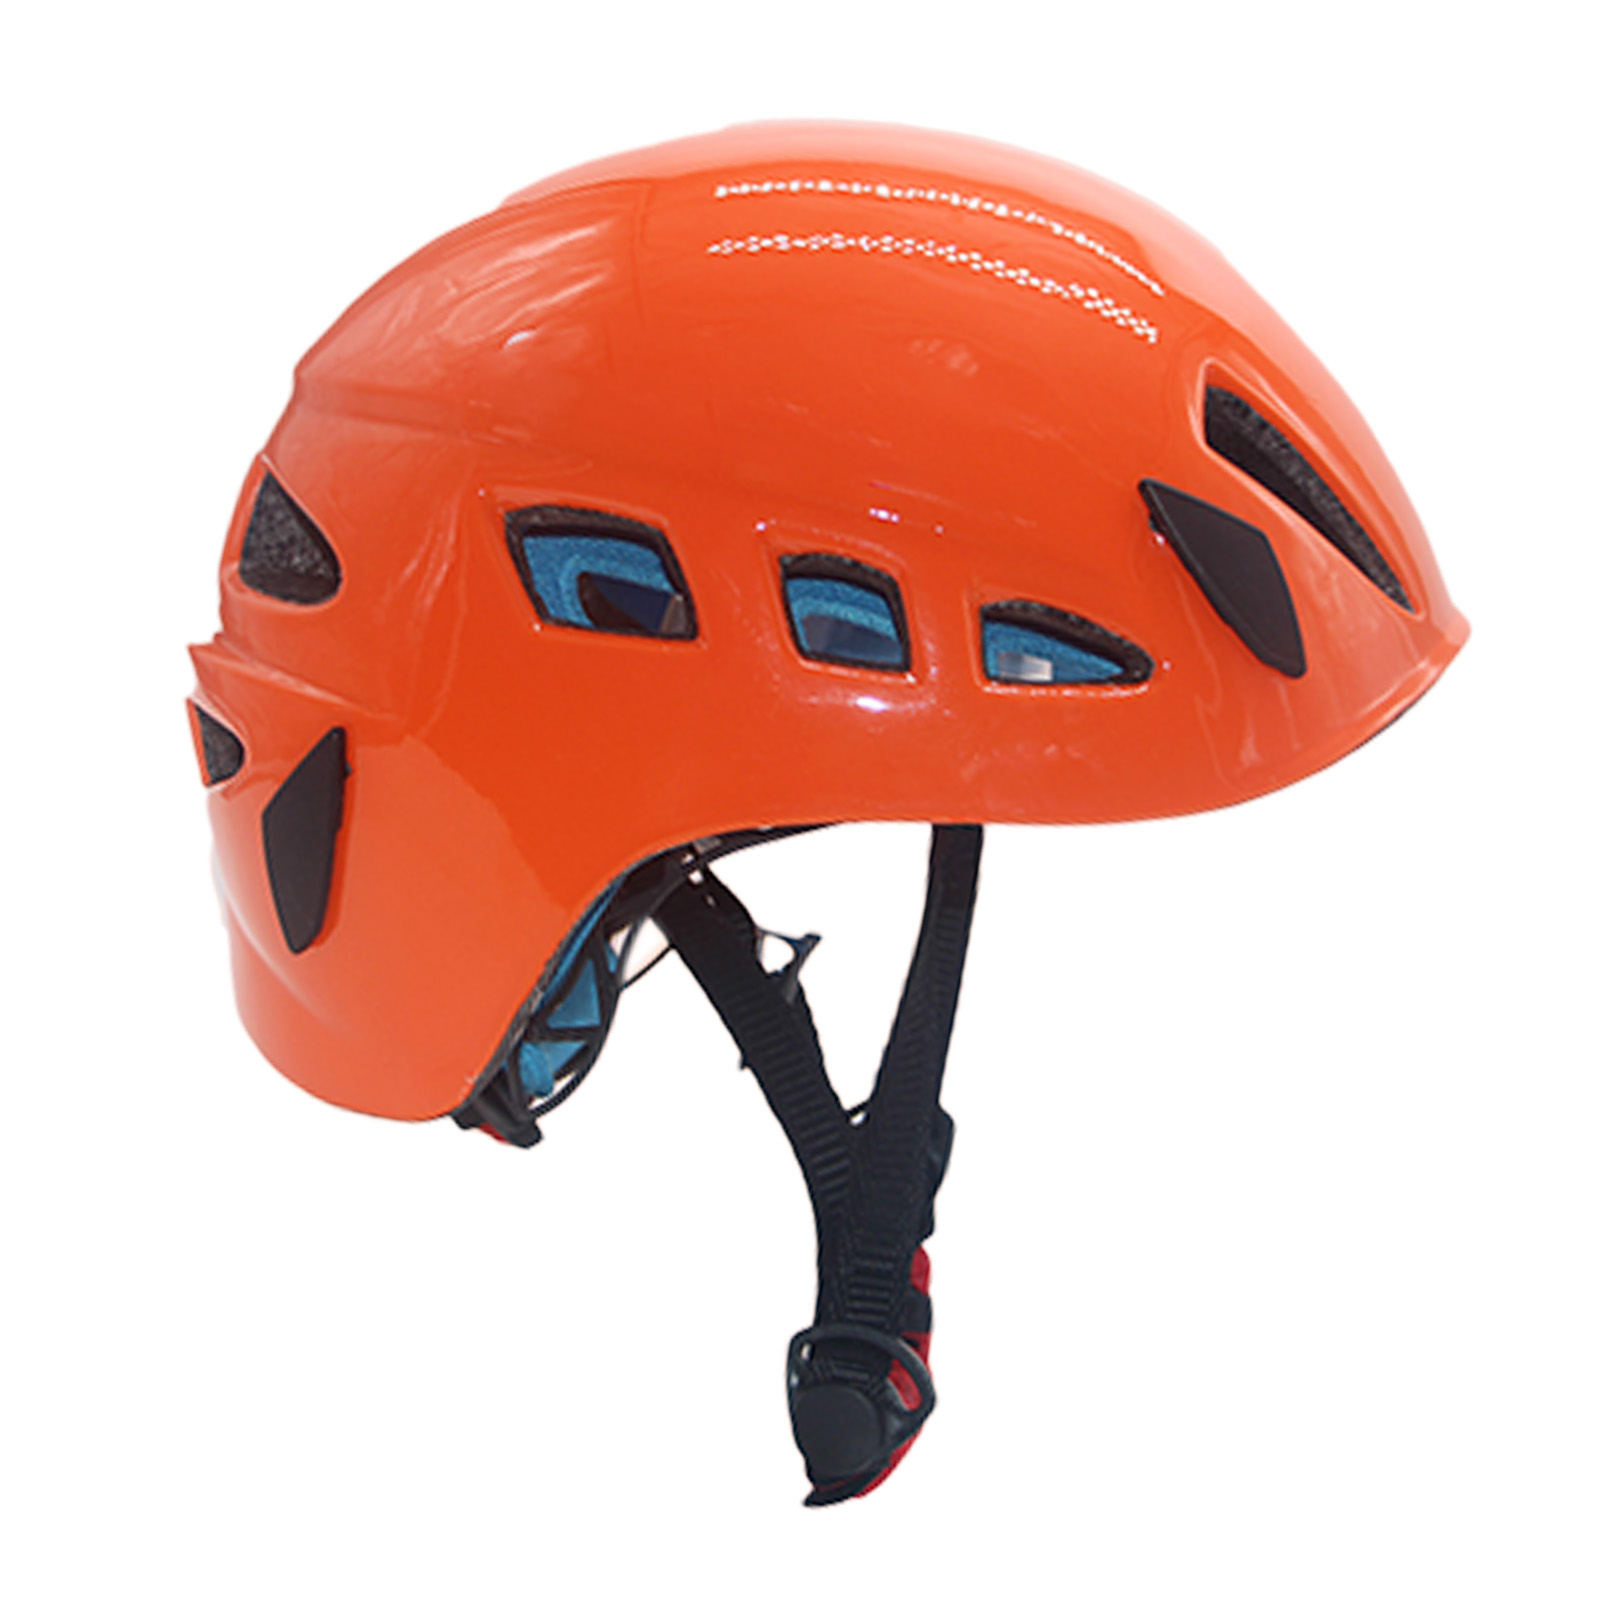 Orange Climbing Helmet Outdoor Sports Safety Helmet Mountain Ice Rock Climbing Cycling Protection Helmets 